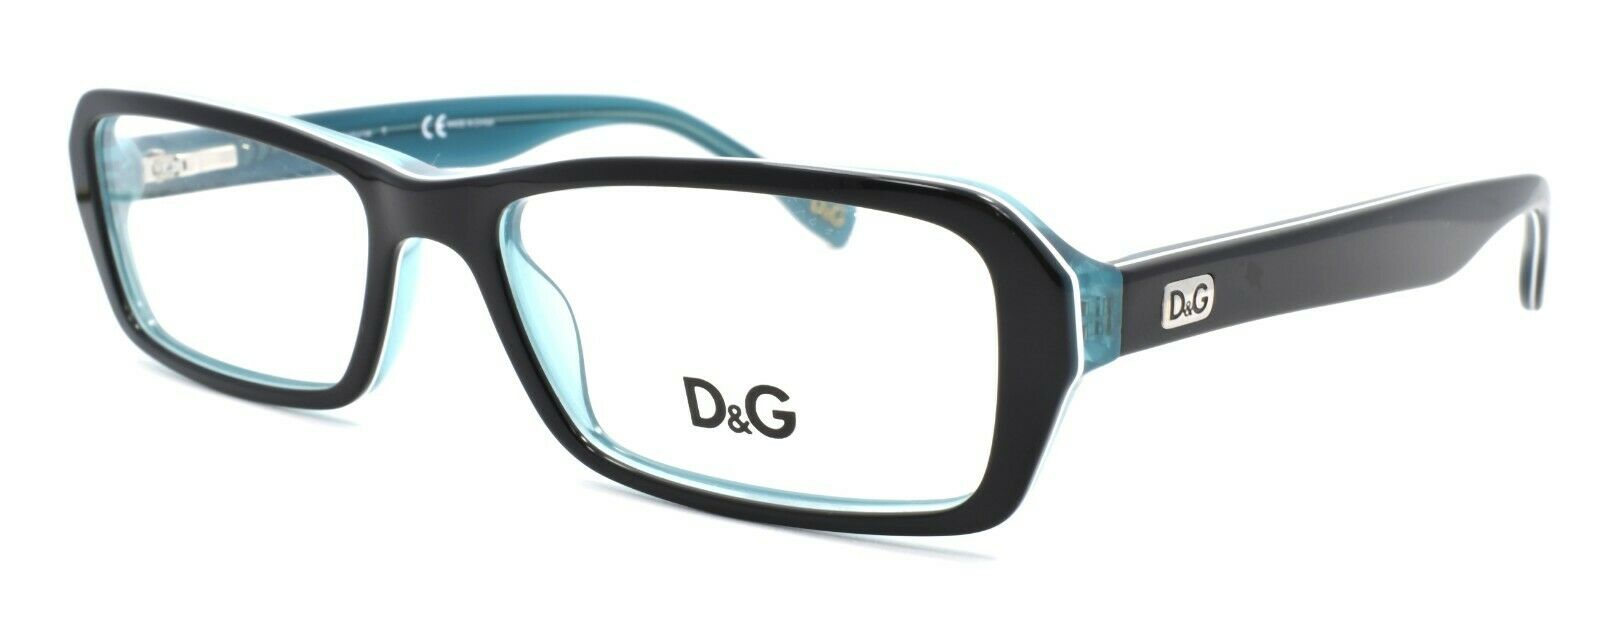 1-Dolce & Gabbana D&G 1225 1870 Women's Eyeglasses 52-16-135 Black / Turquoise-679420460758-IKSpecs